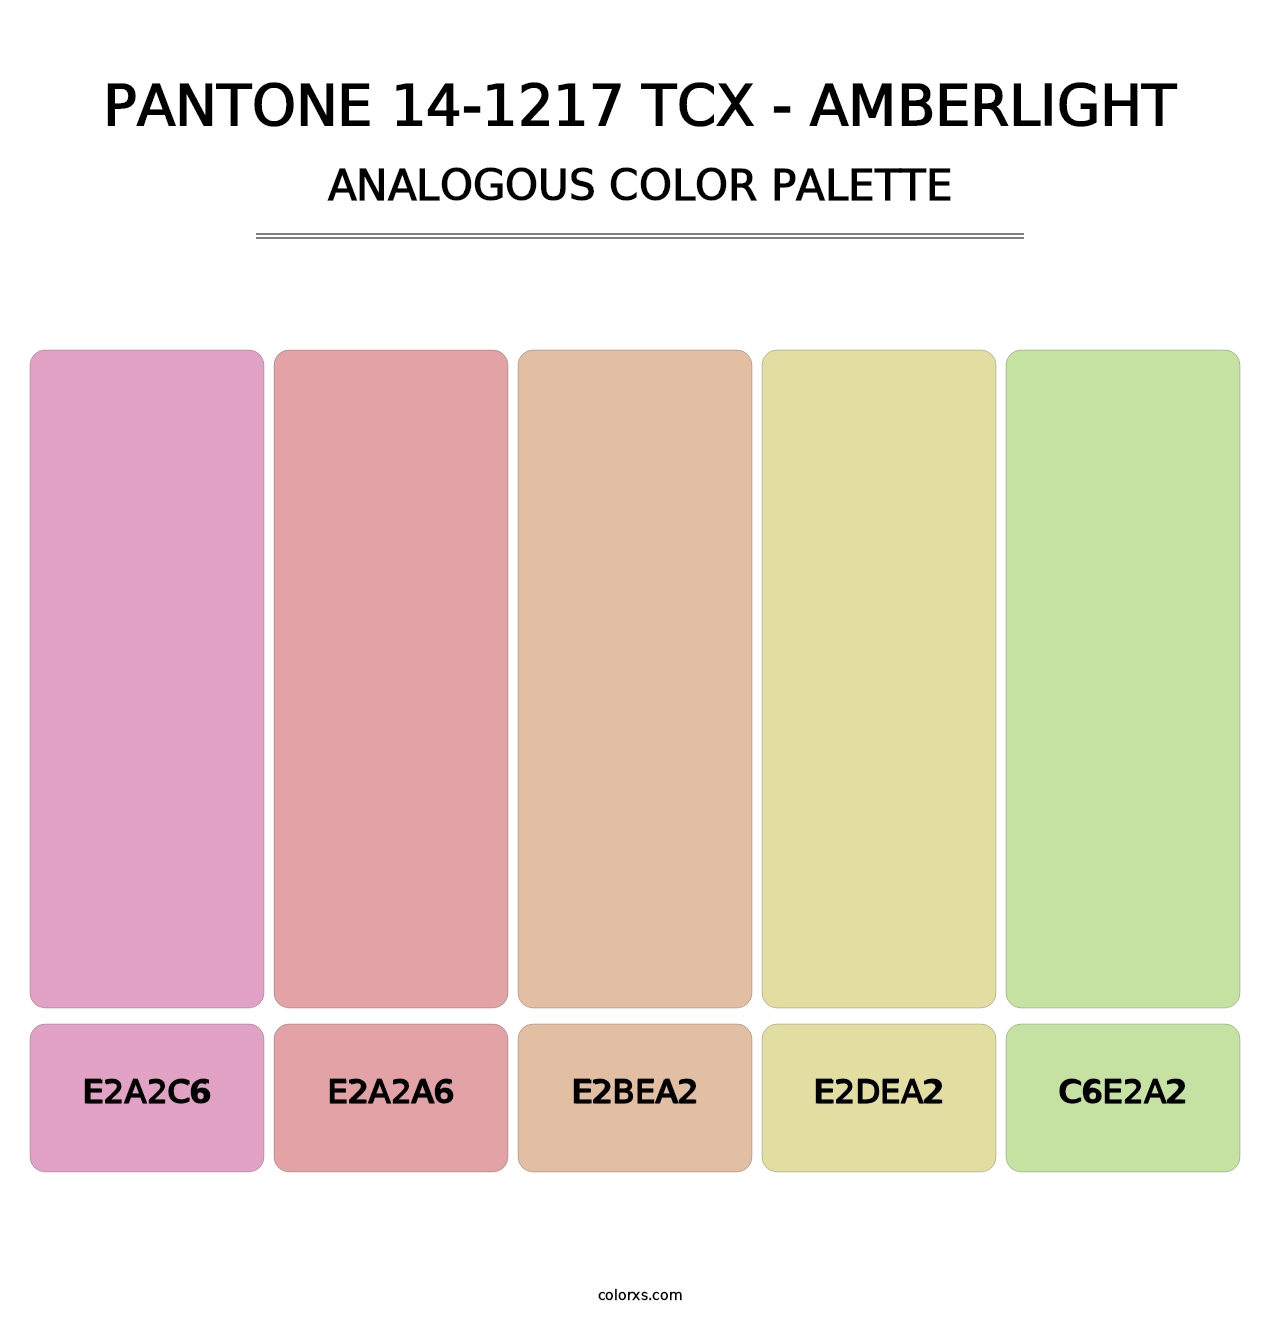 PANTONE 14-1217 TCX - Amberlight - Analogous Color Palette